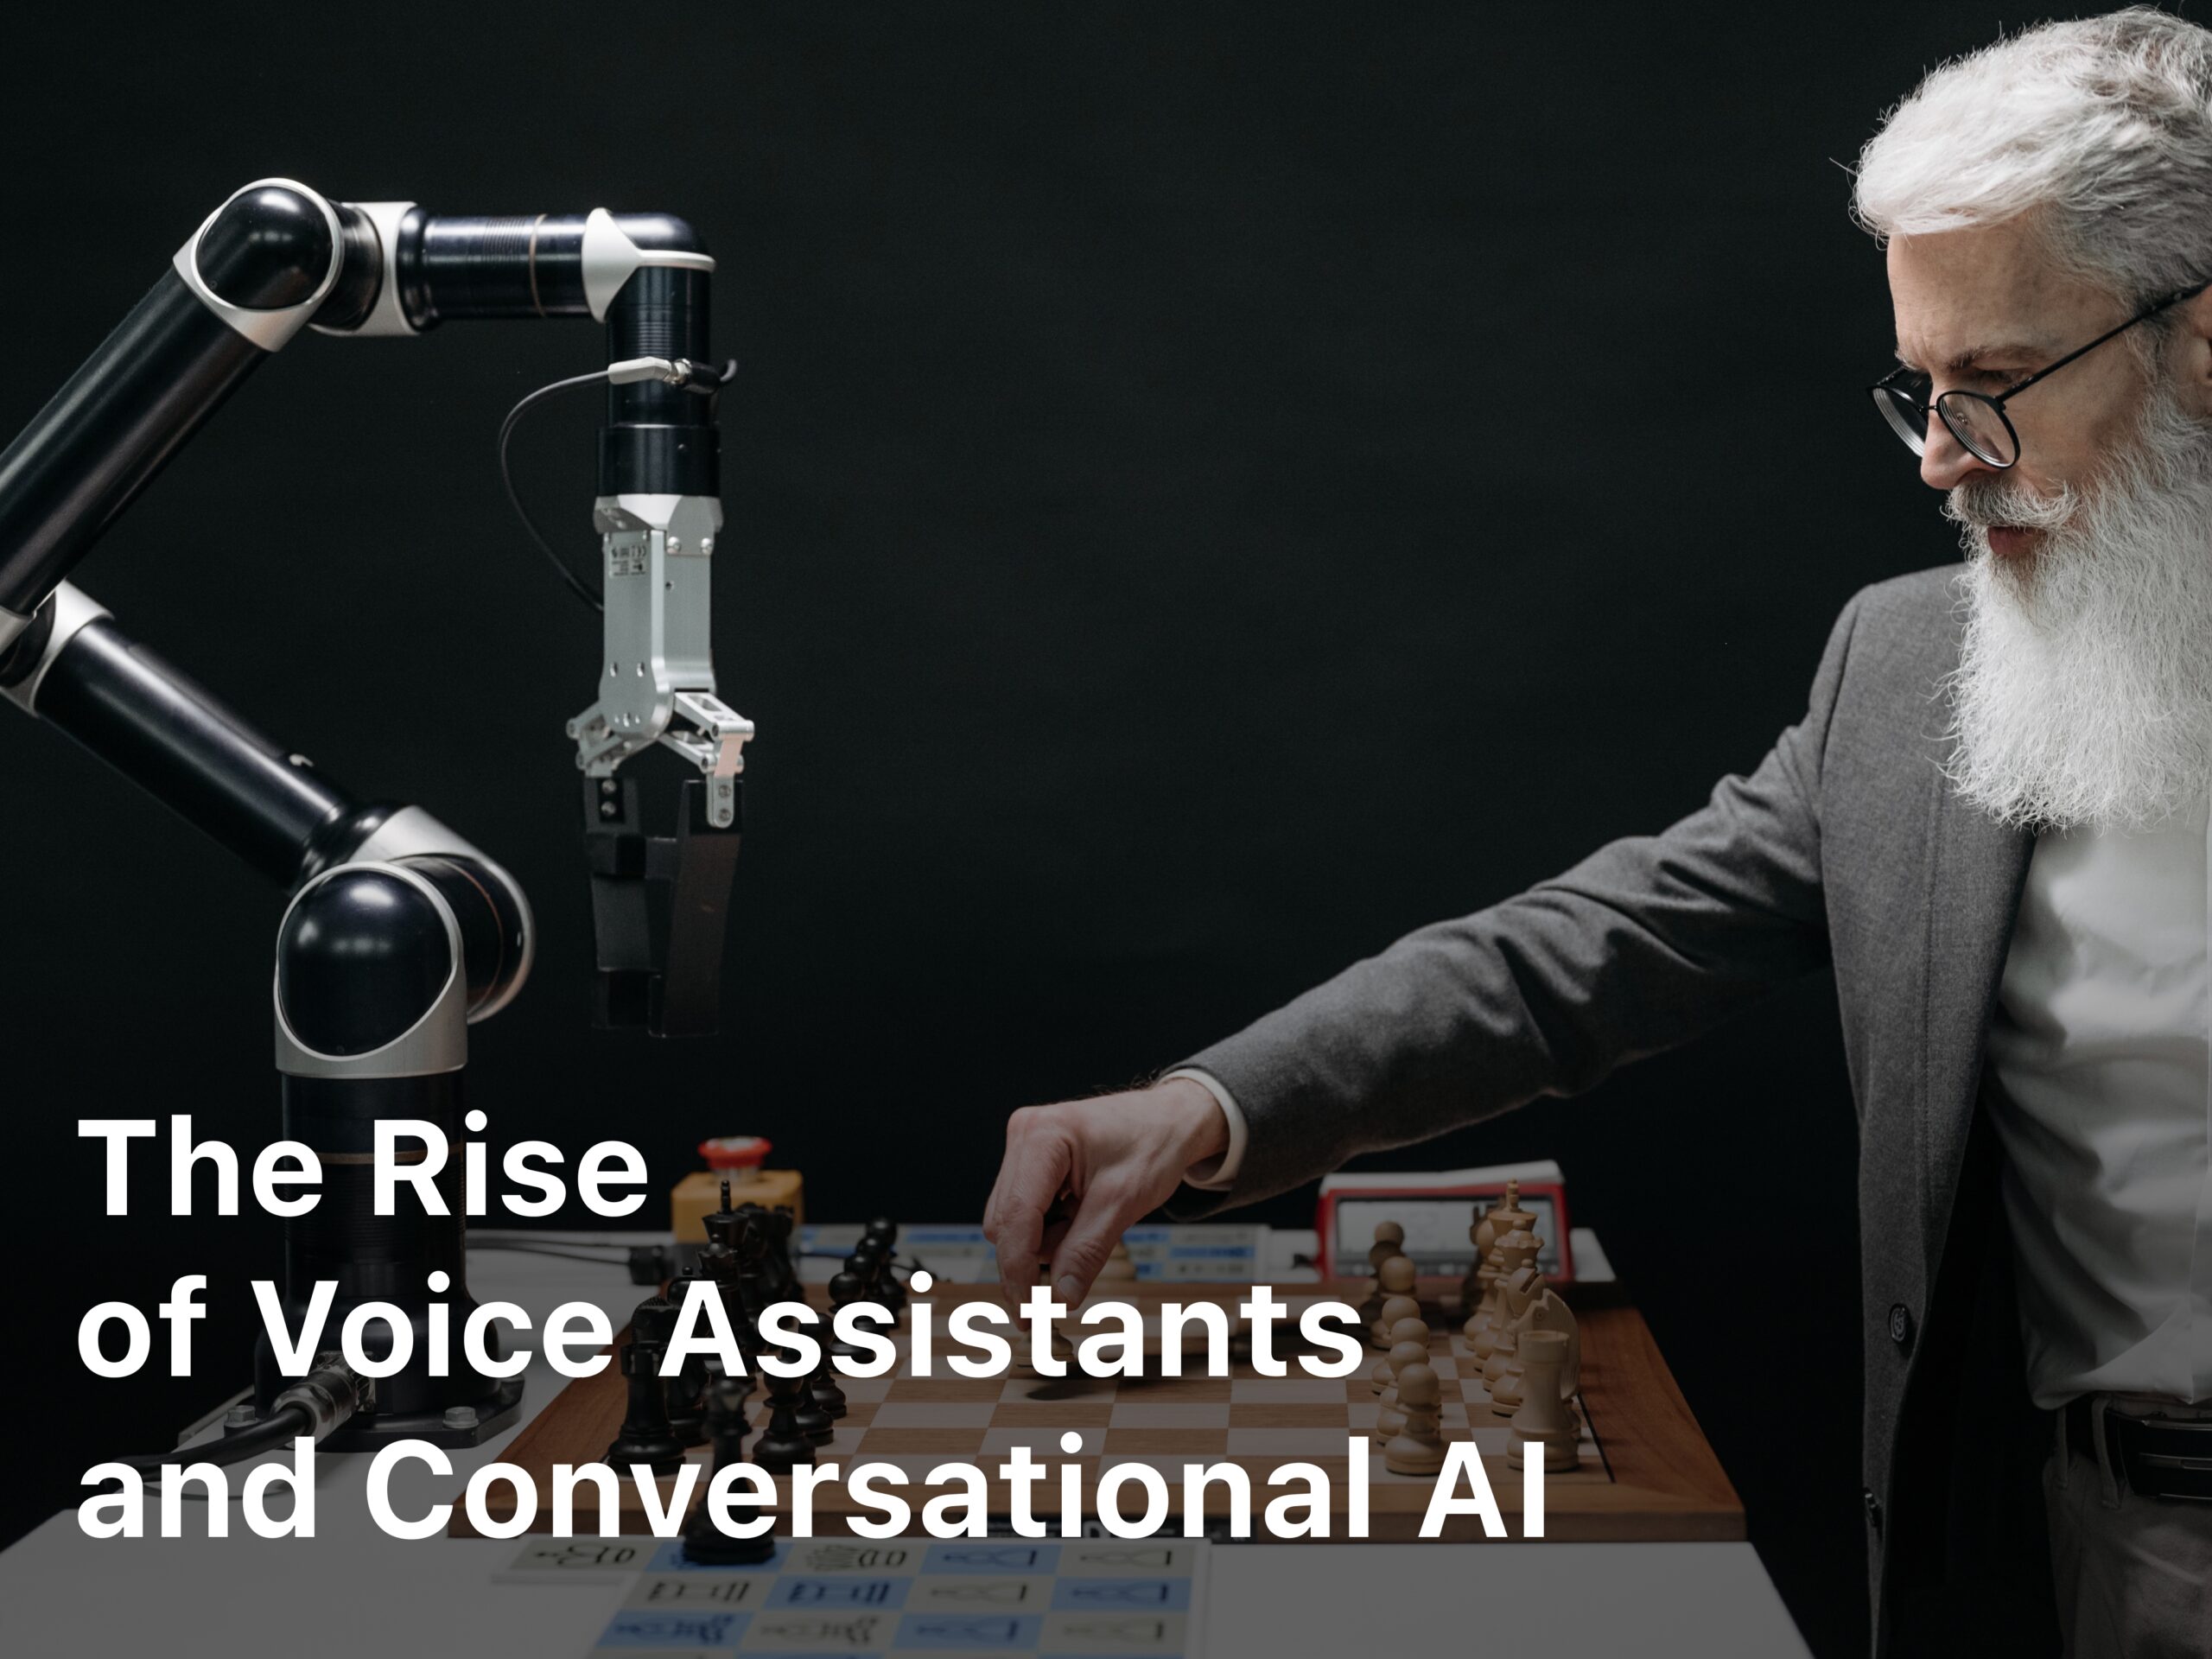 Voice assistants and conversational AI